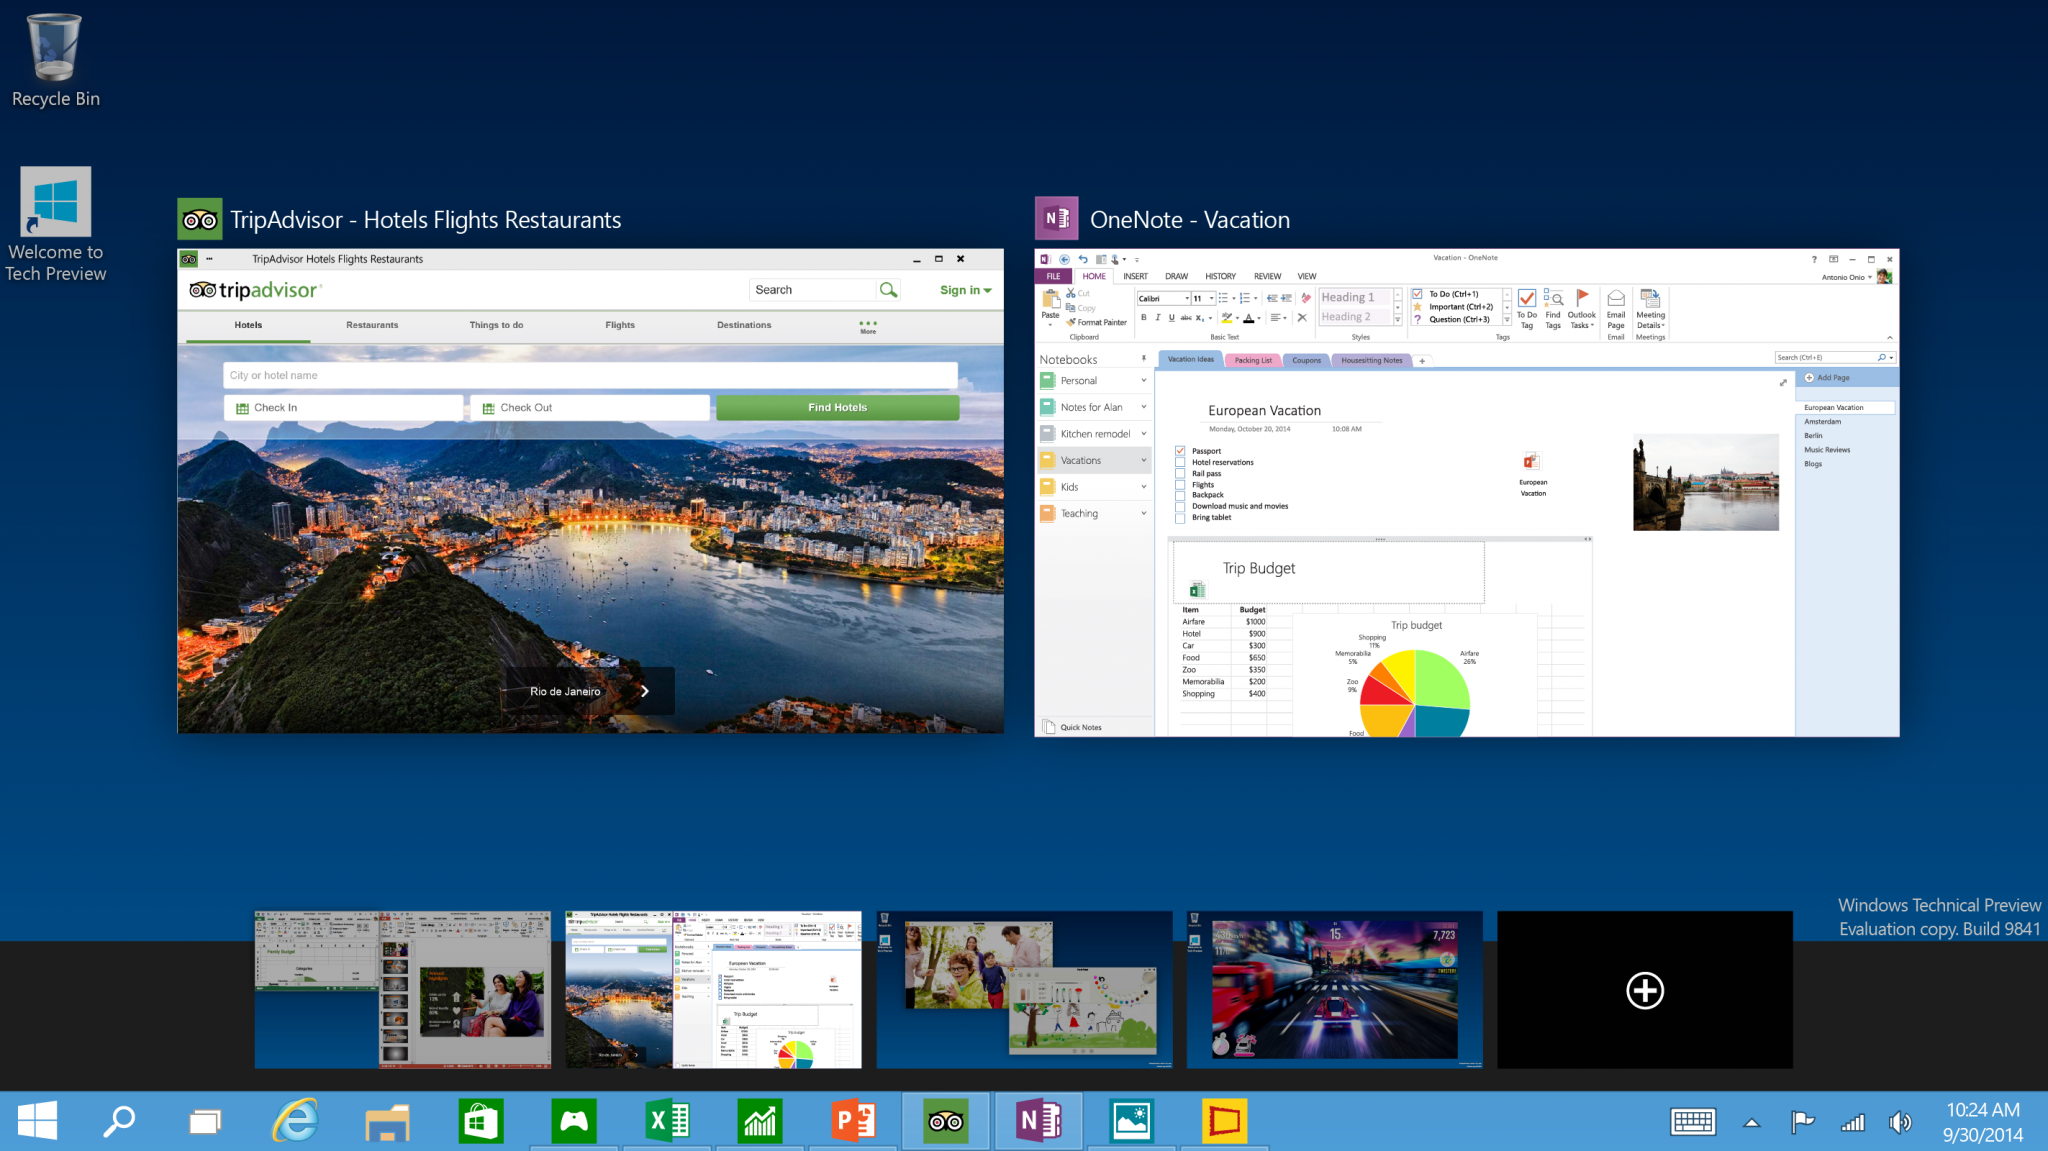 Tech Preview Virtual desktop - Microsoft Unveils Windows 10 with Major Improvements [Download Link Here]